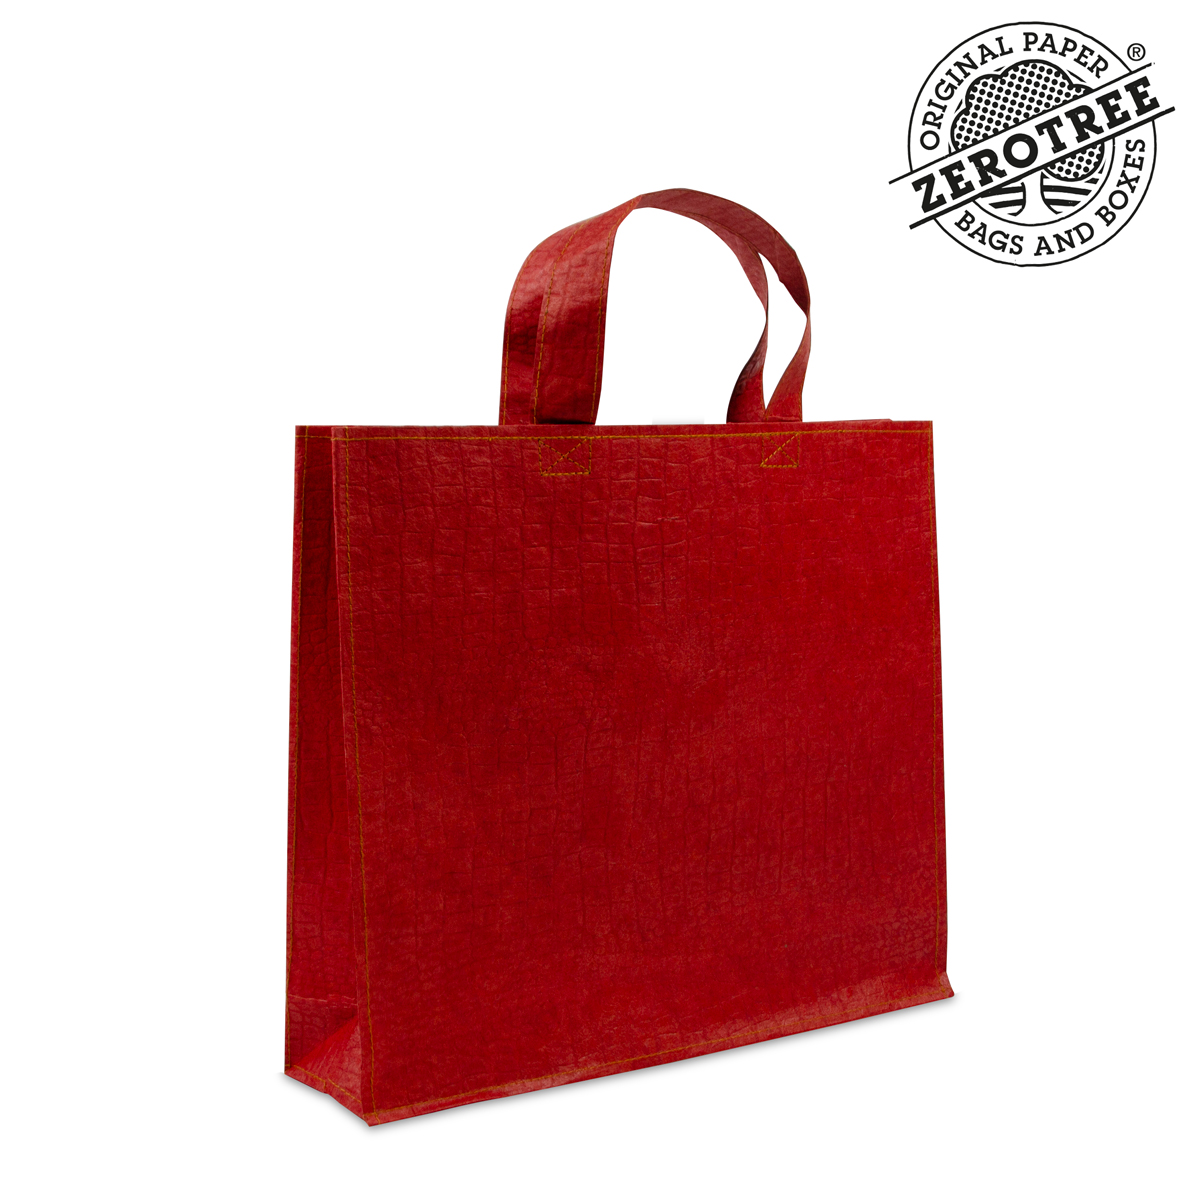 Classic ZEROTREE® bags - Croco embossing